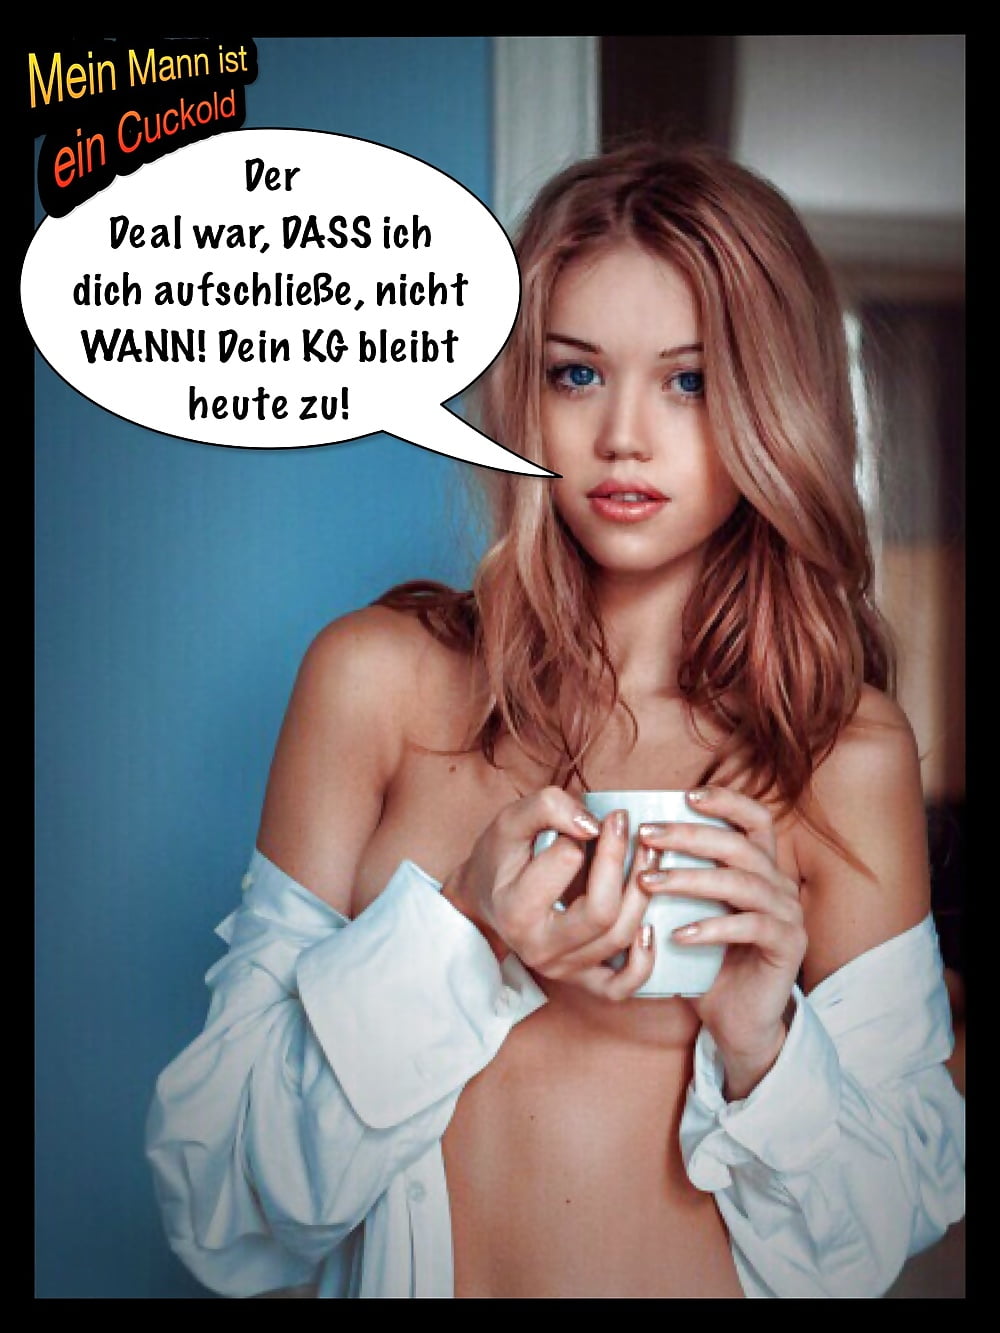 German cuckold captions #2 (19/30)